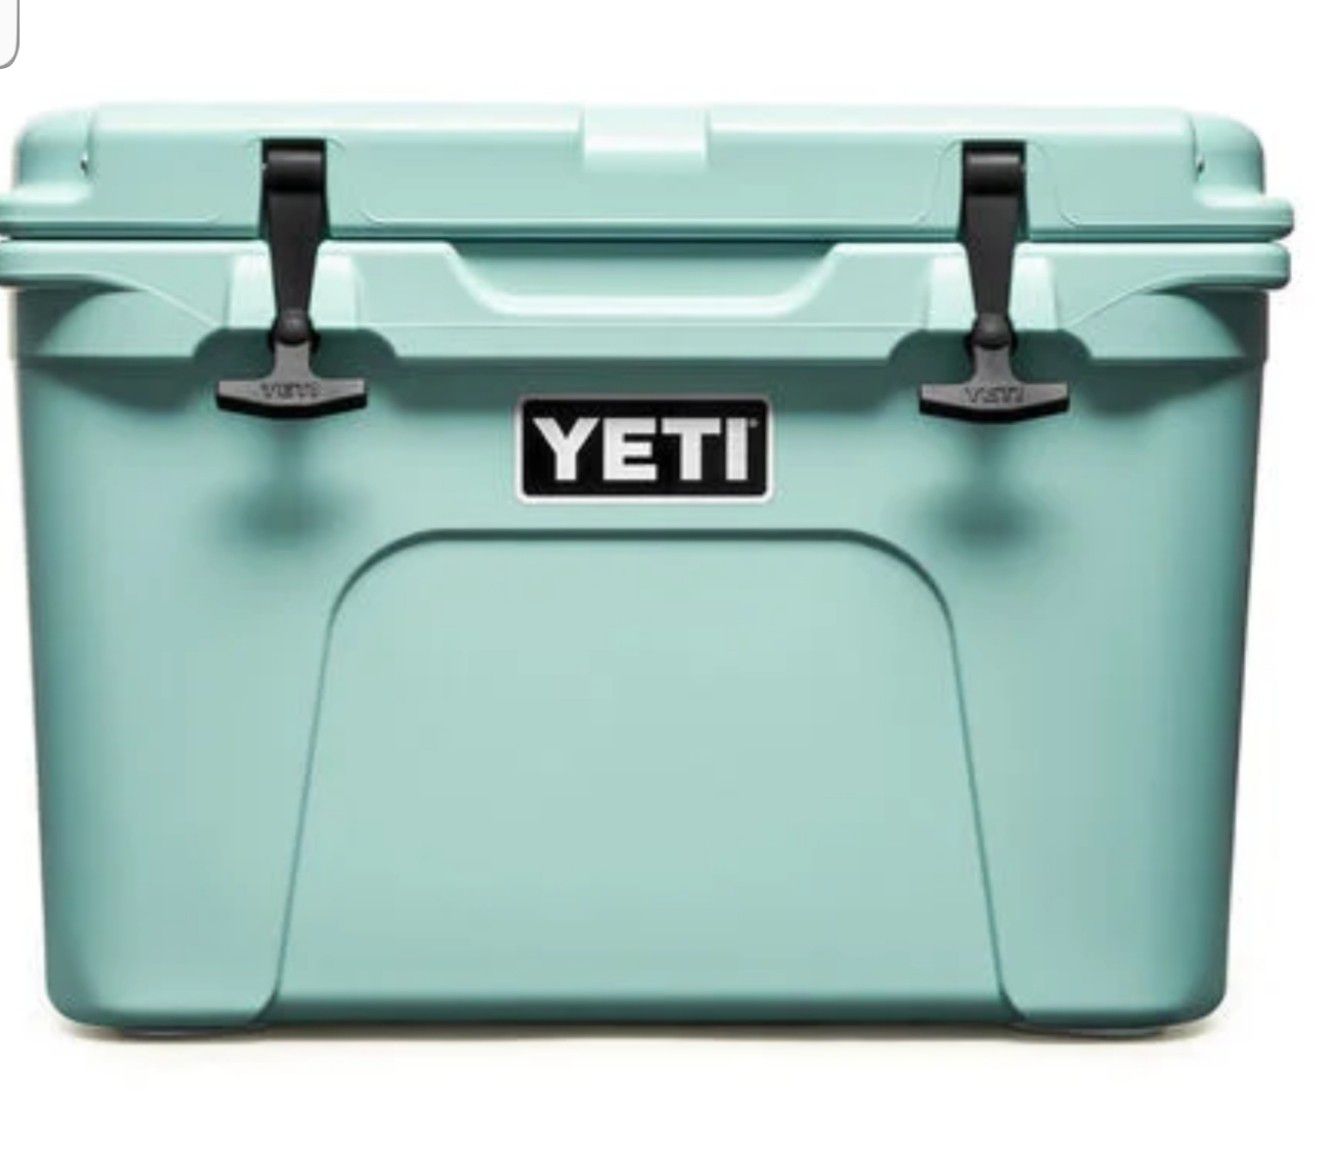 New Yeti Tundra 35 Cooler